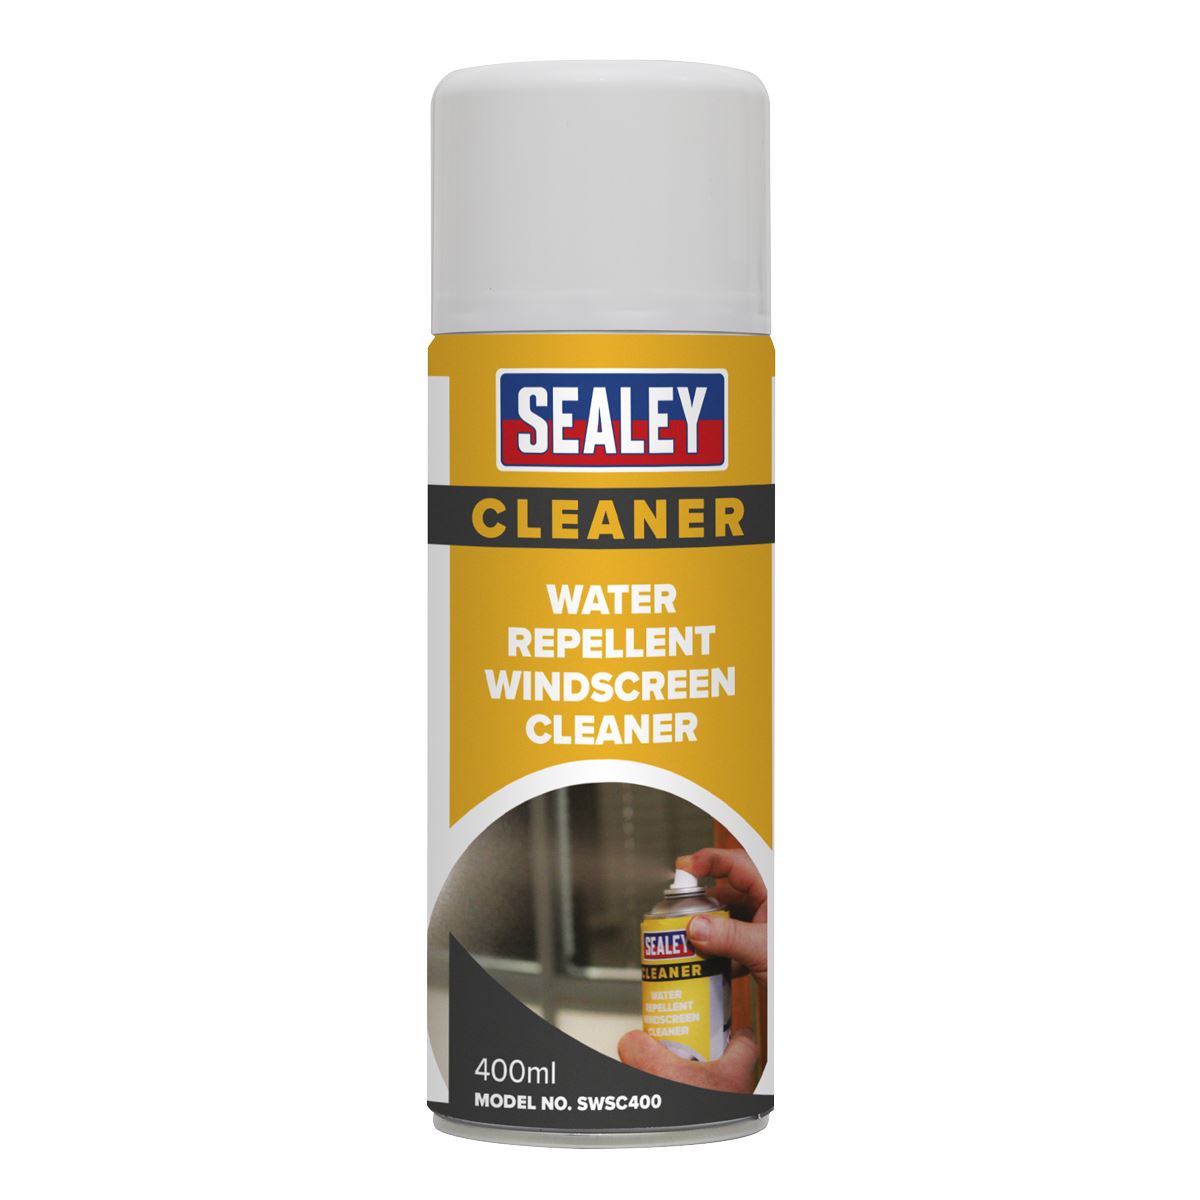 Sealey Windscreen Cleaner, Water Repellent 400ml